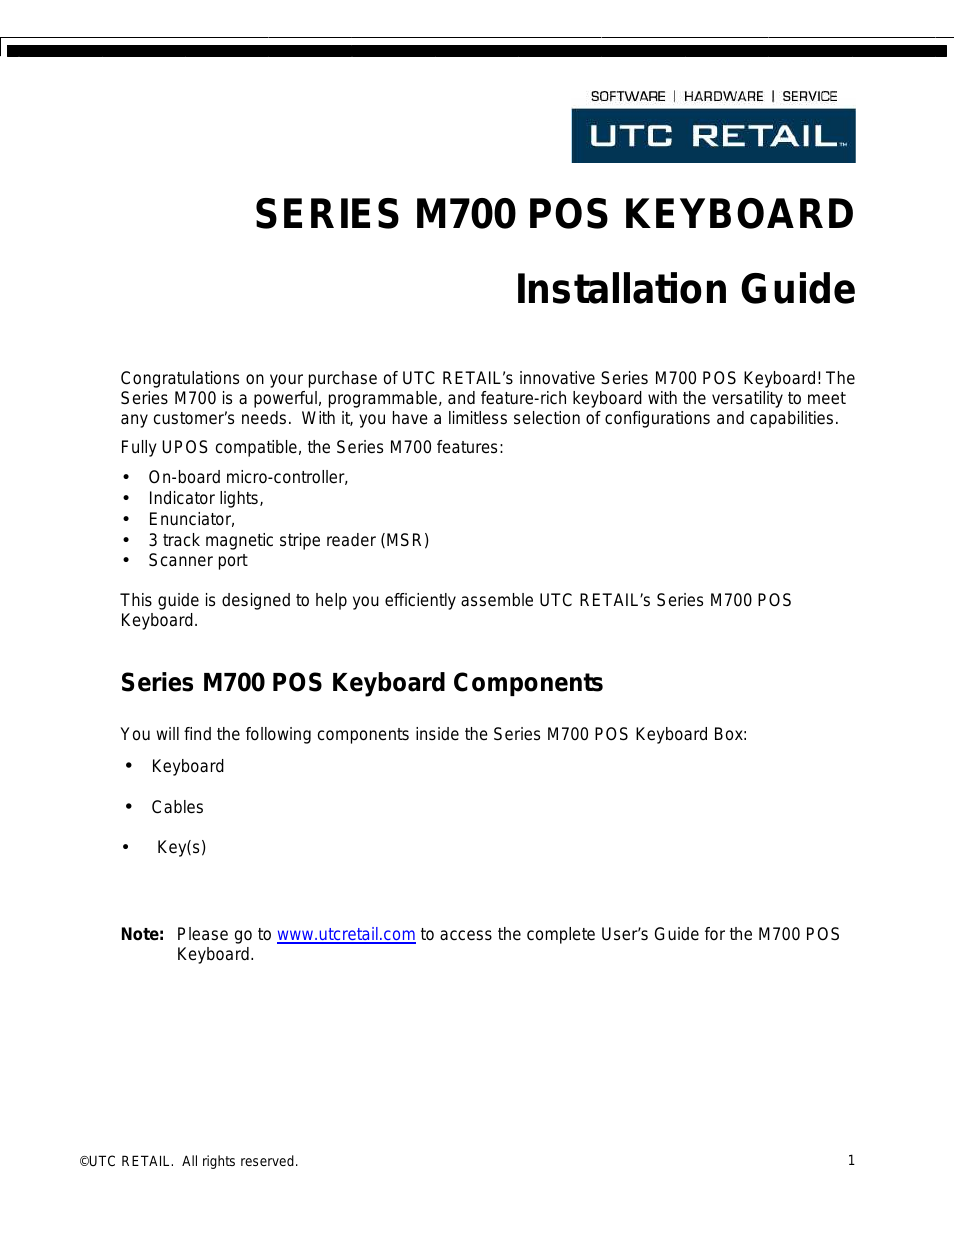 POS Keyboard M700 (Page 1)